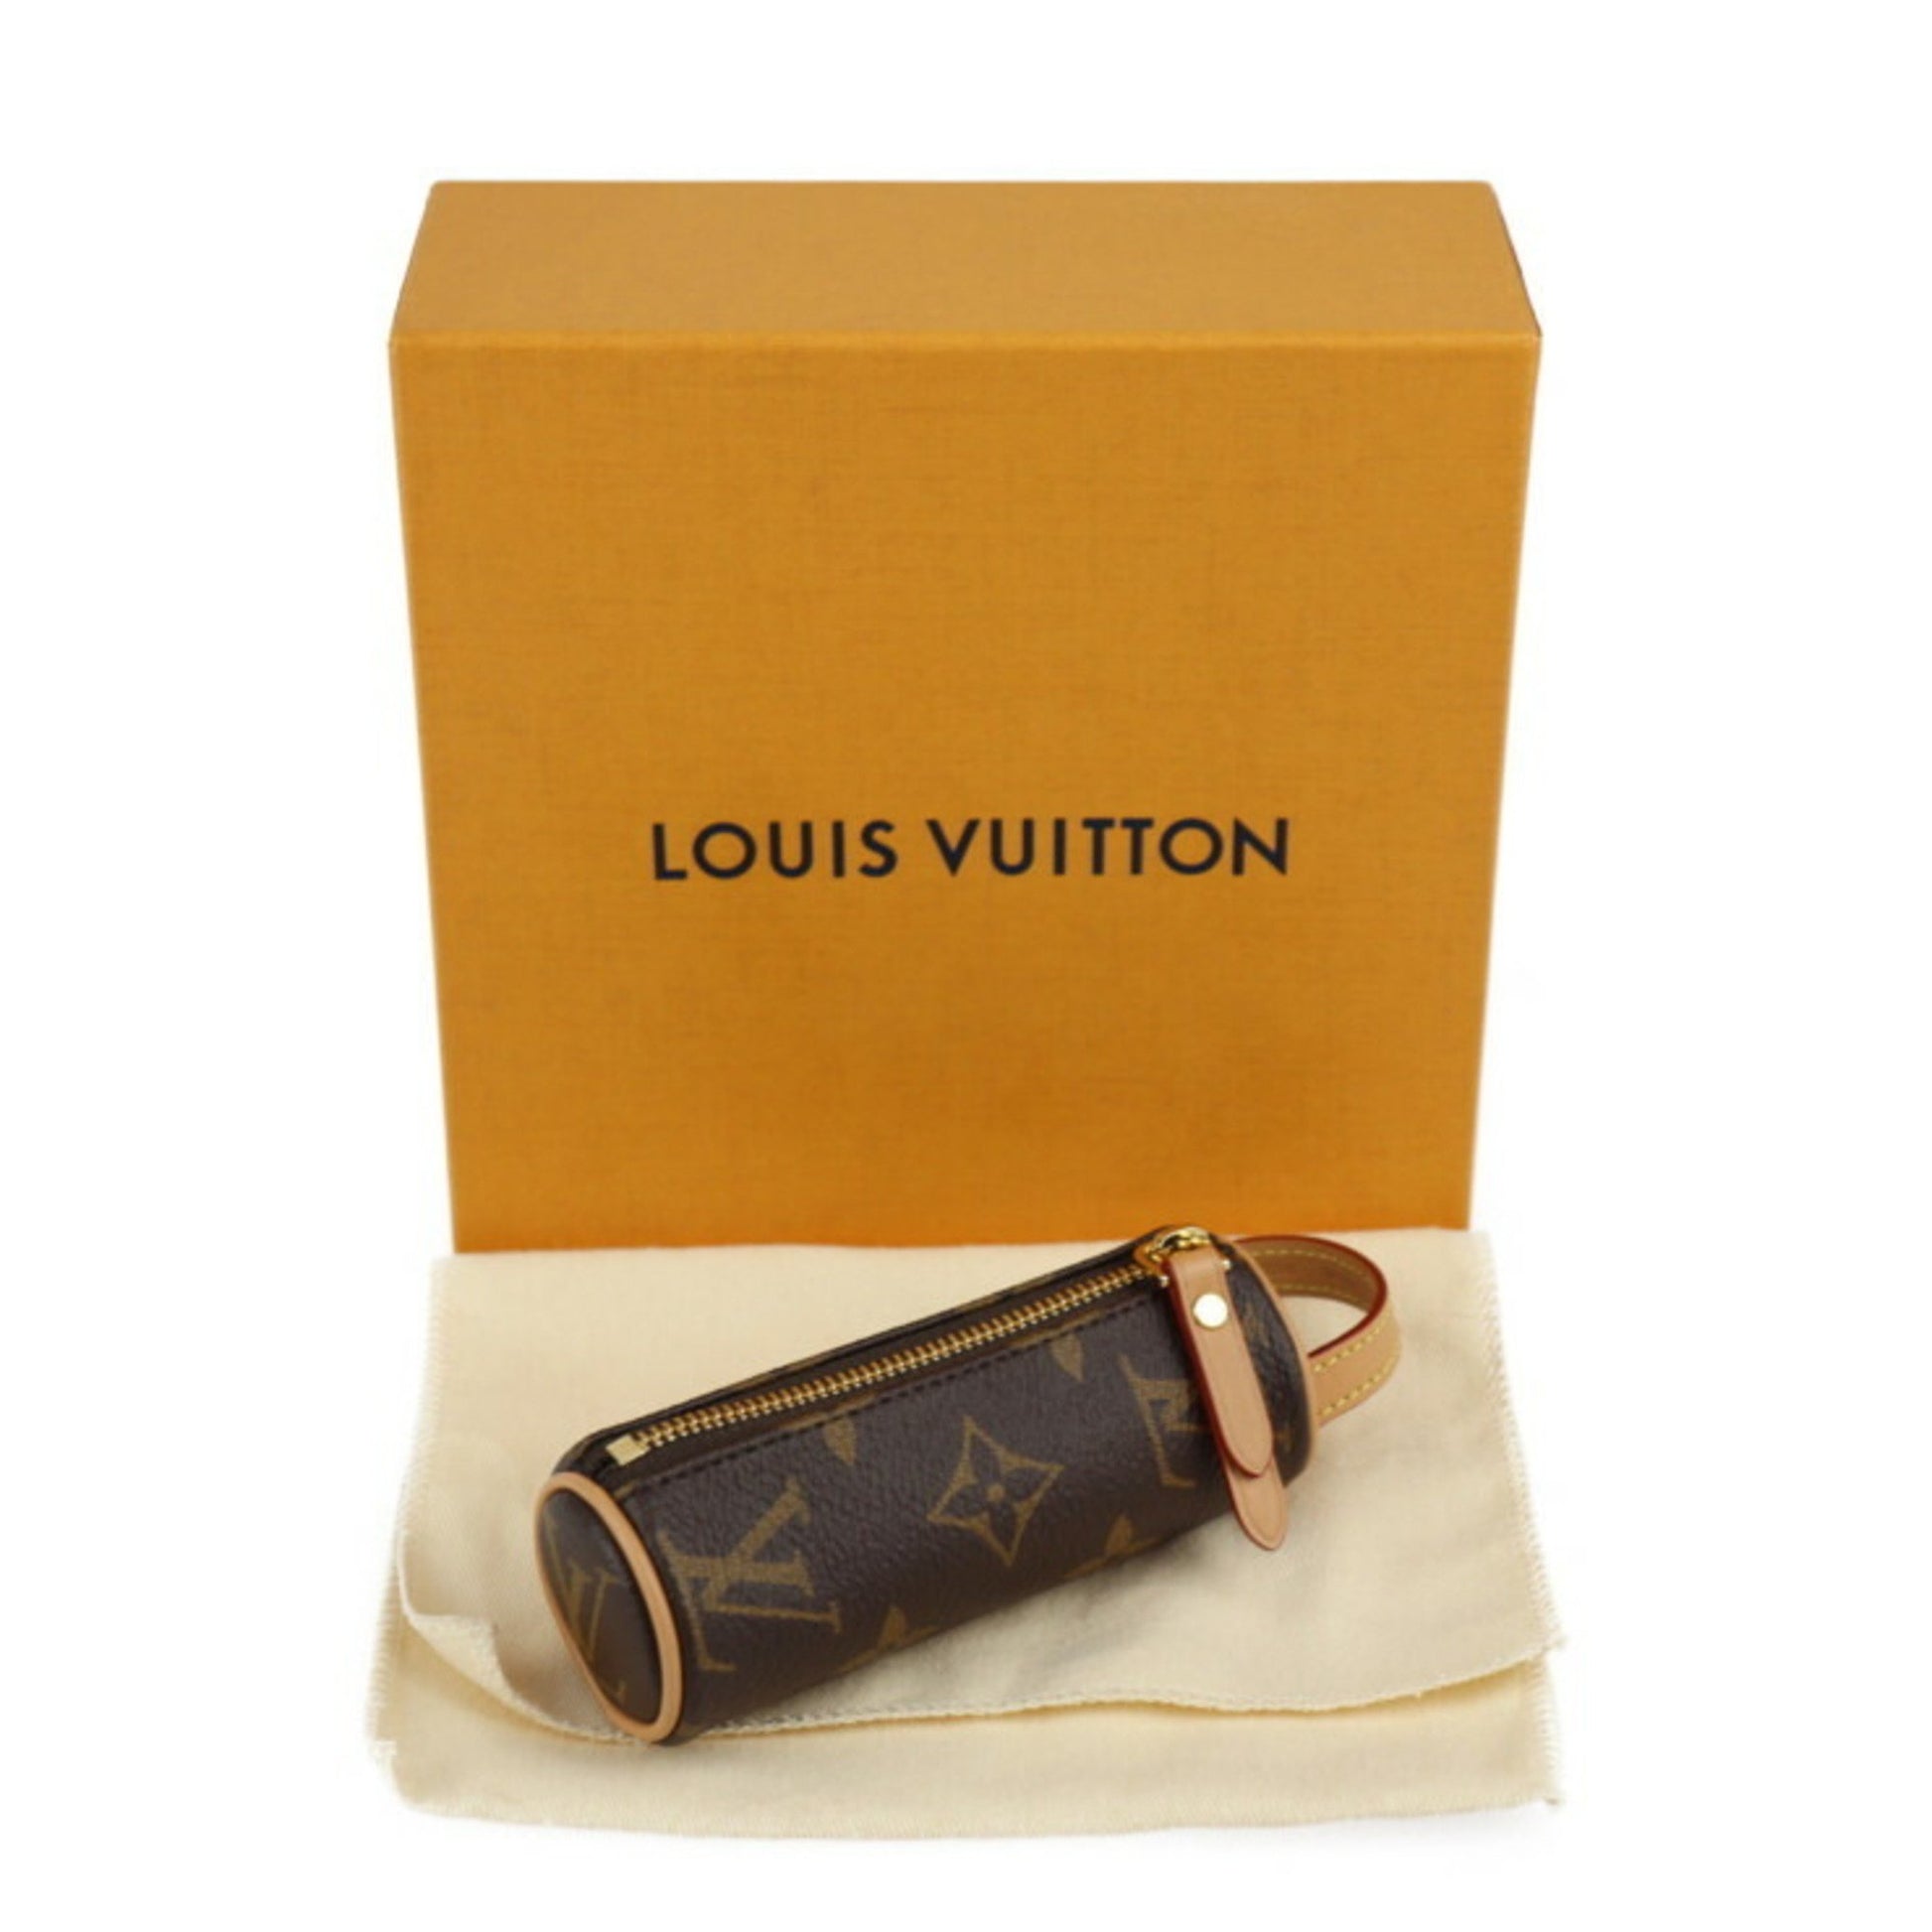 Shop Louis Vuitton Micro papillon bag charm (M00354) by